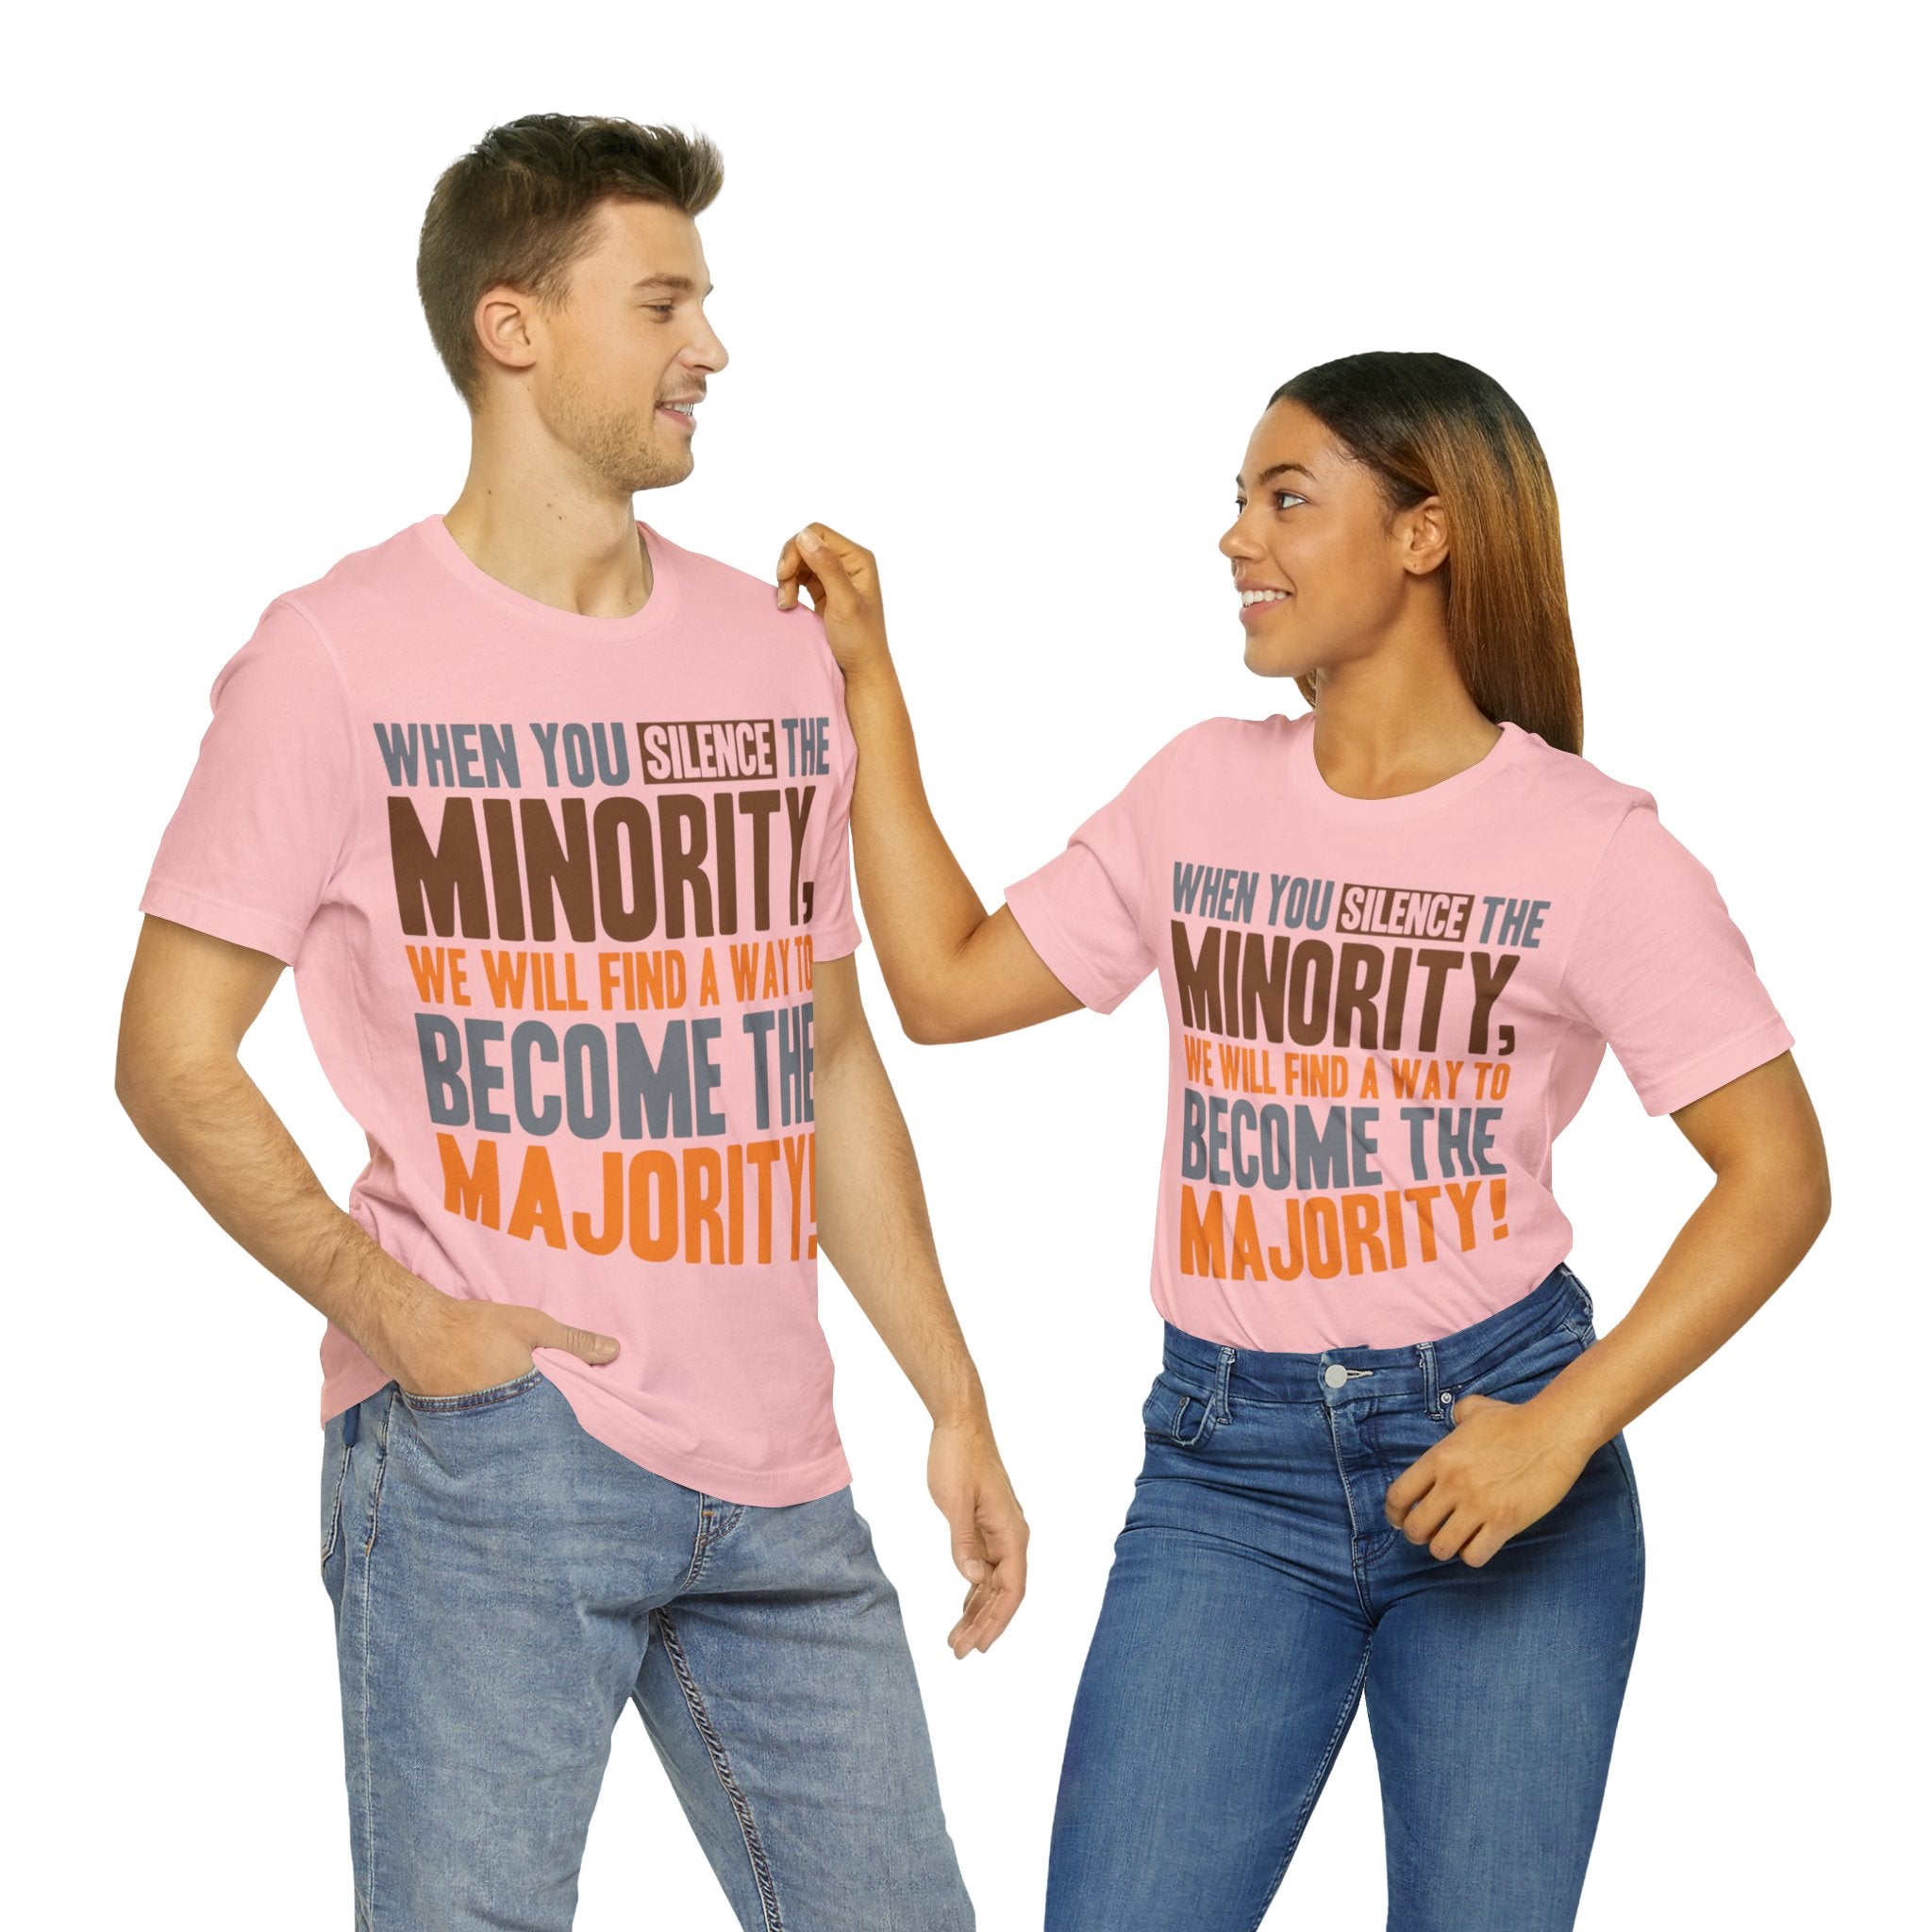 Silence the Minority - Become the Majority